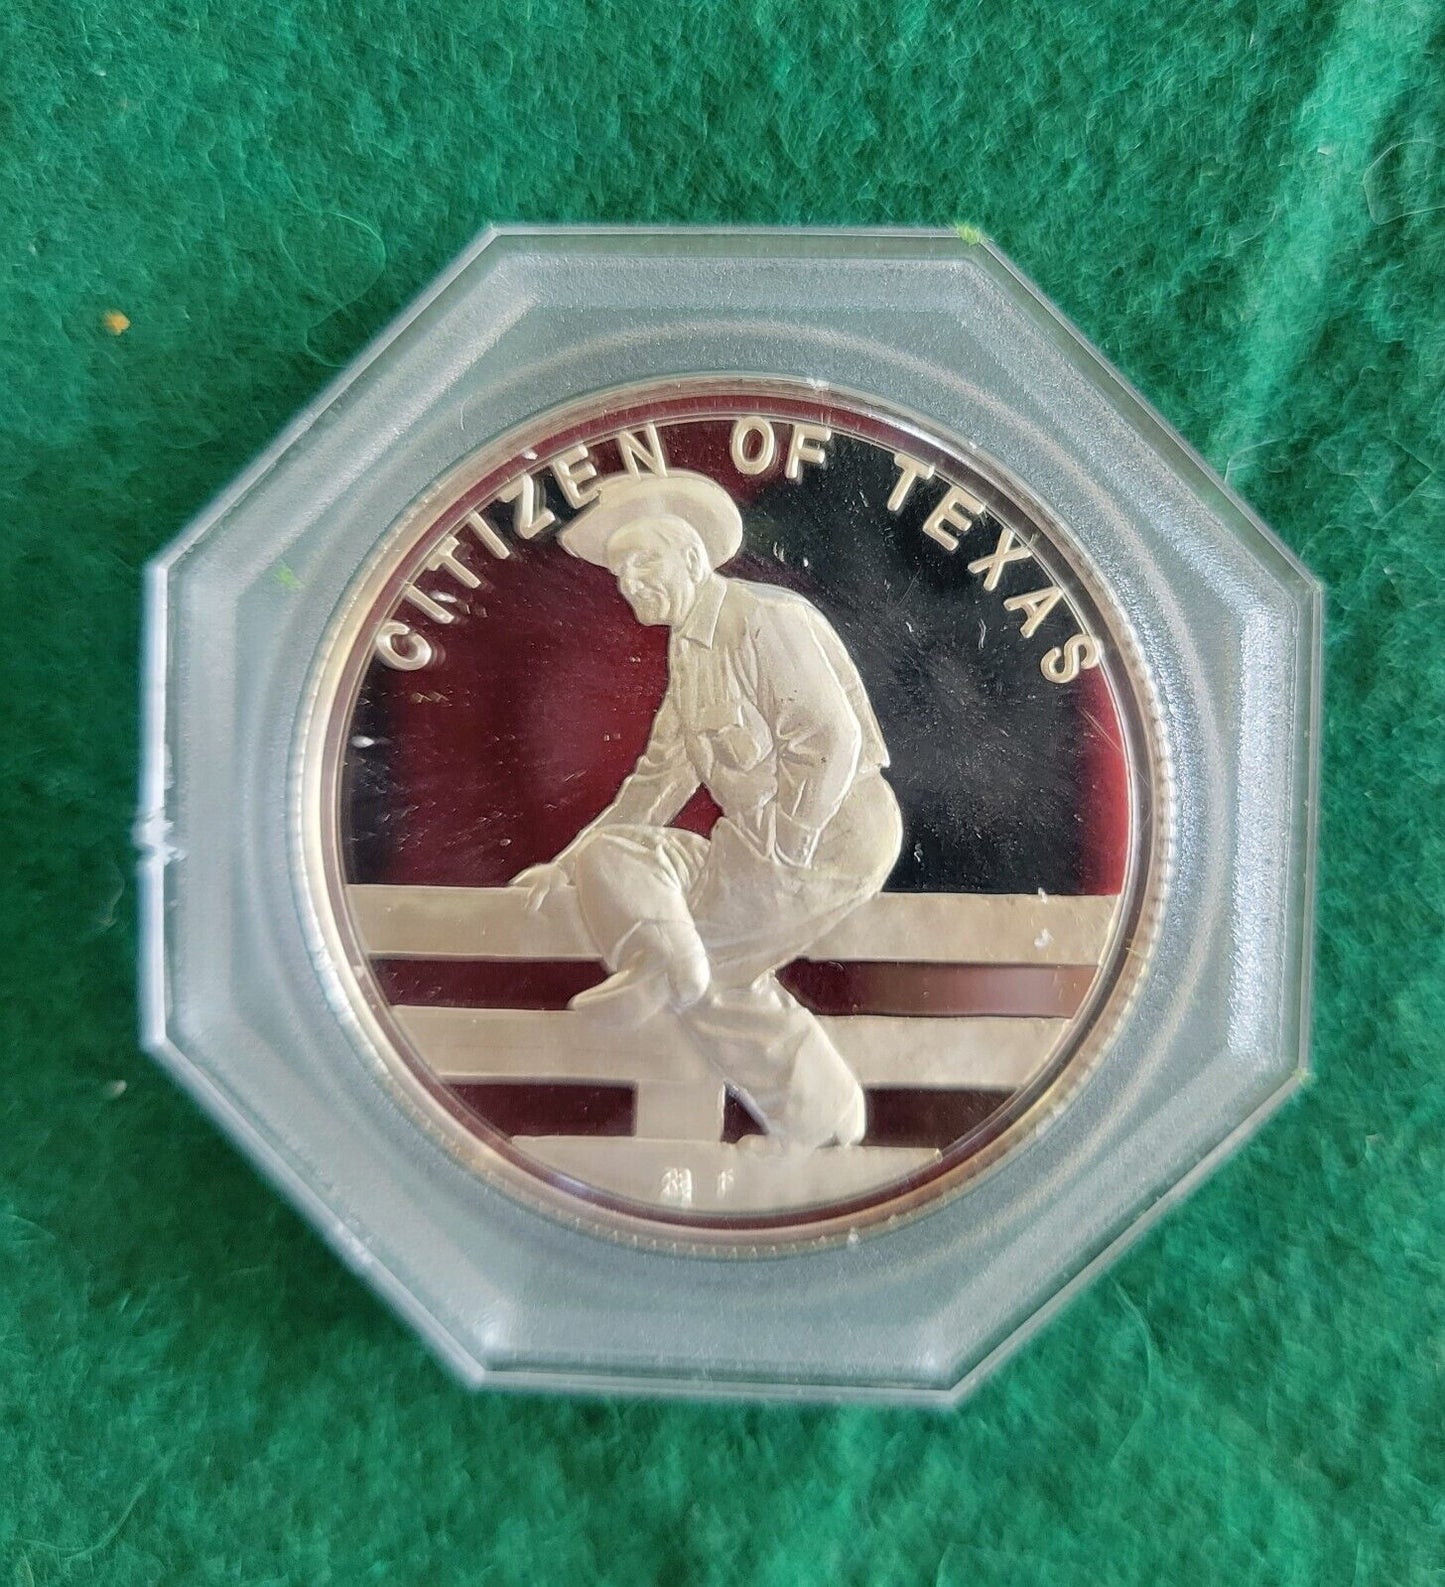 Salute To L.B.J. President Lyndon Johnson 2pc Franklin Mint Sterling Medals